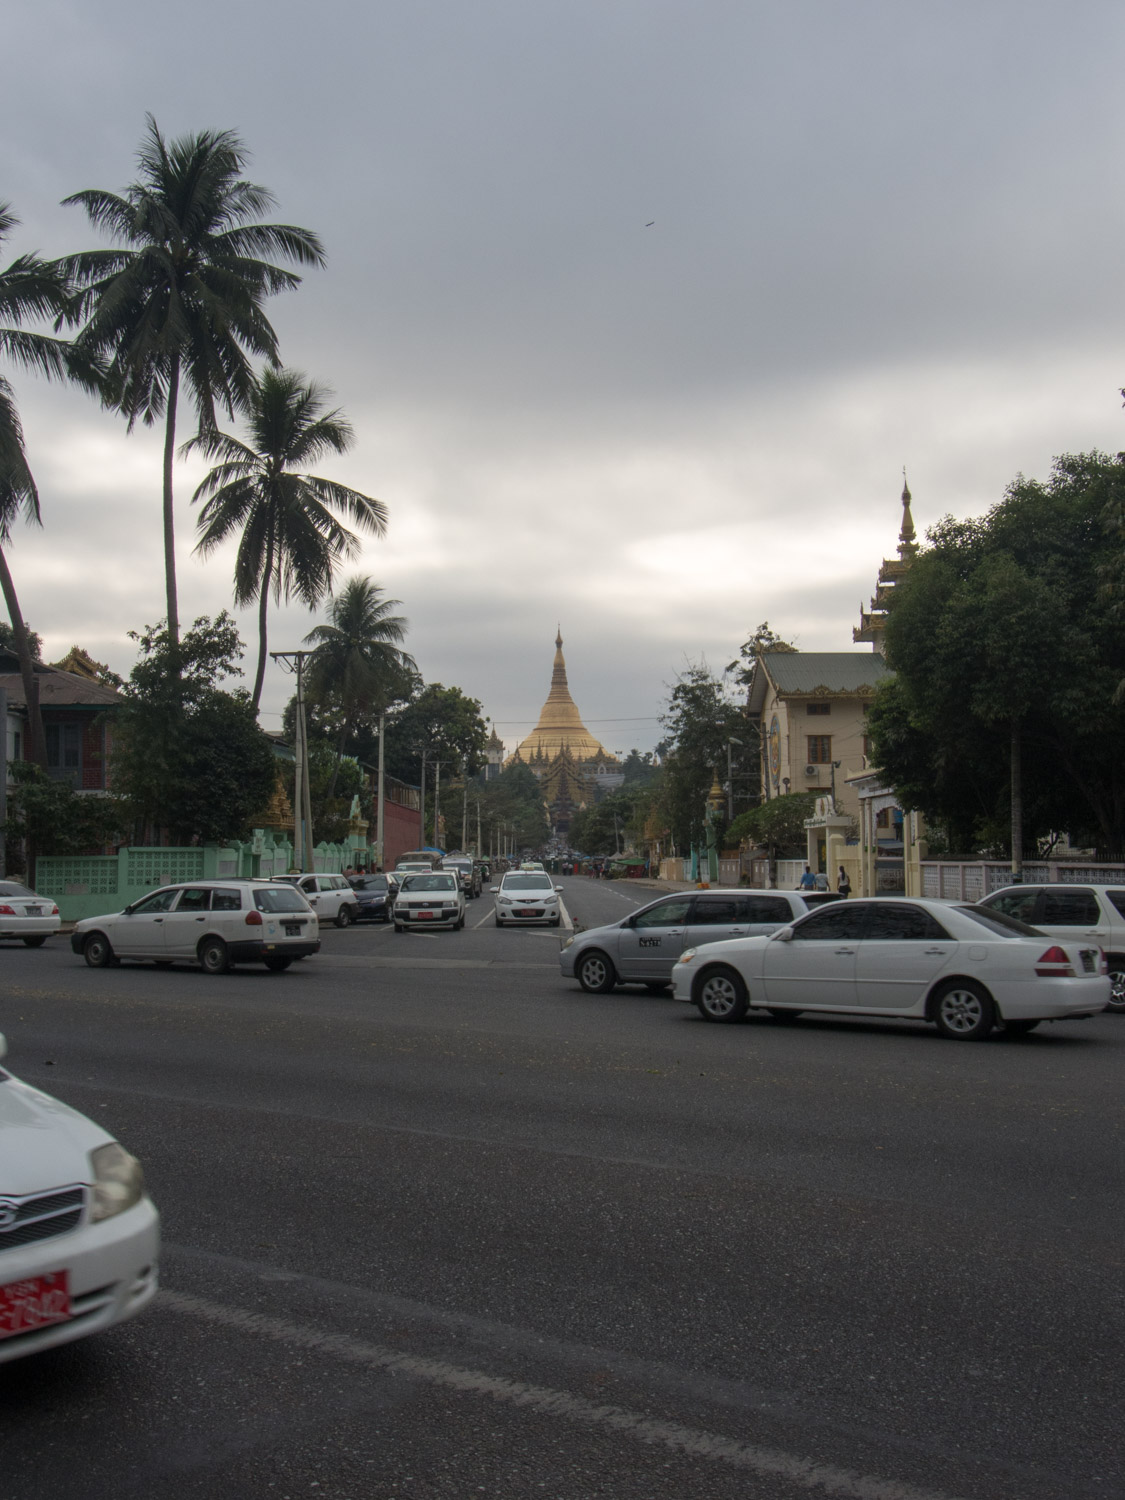 All roads lead to Shwedagon.